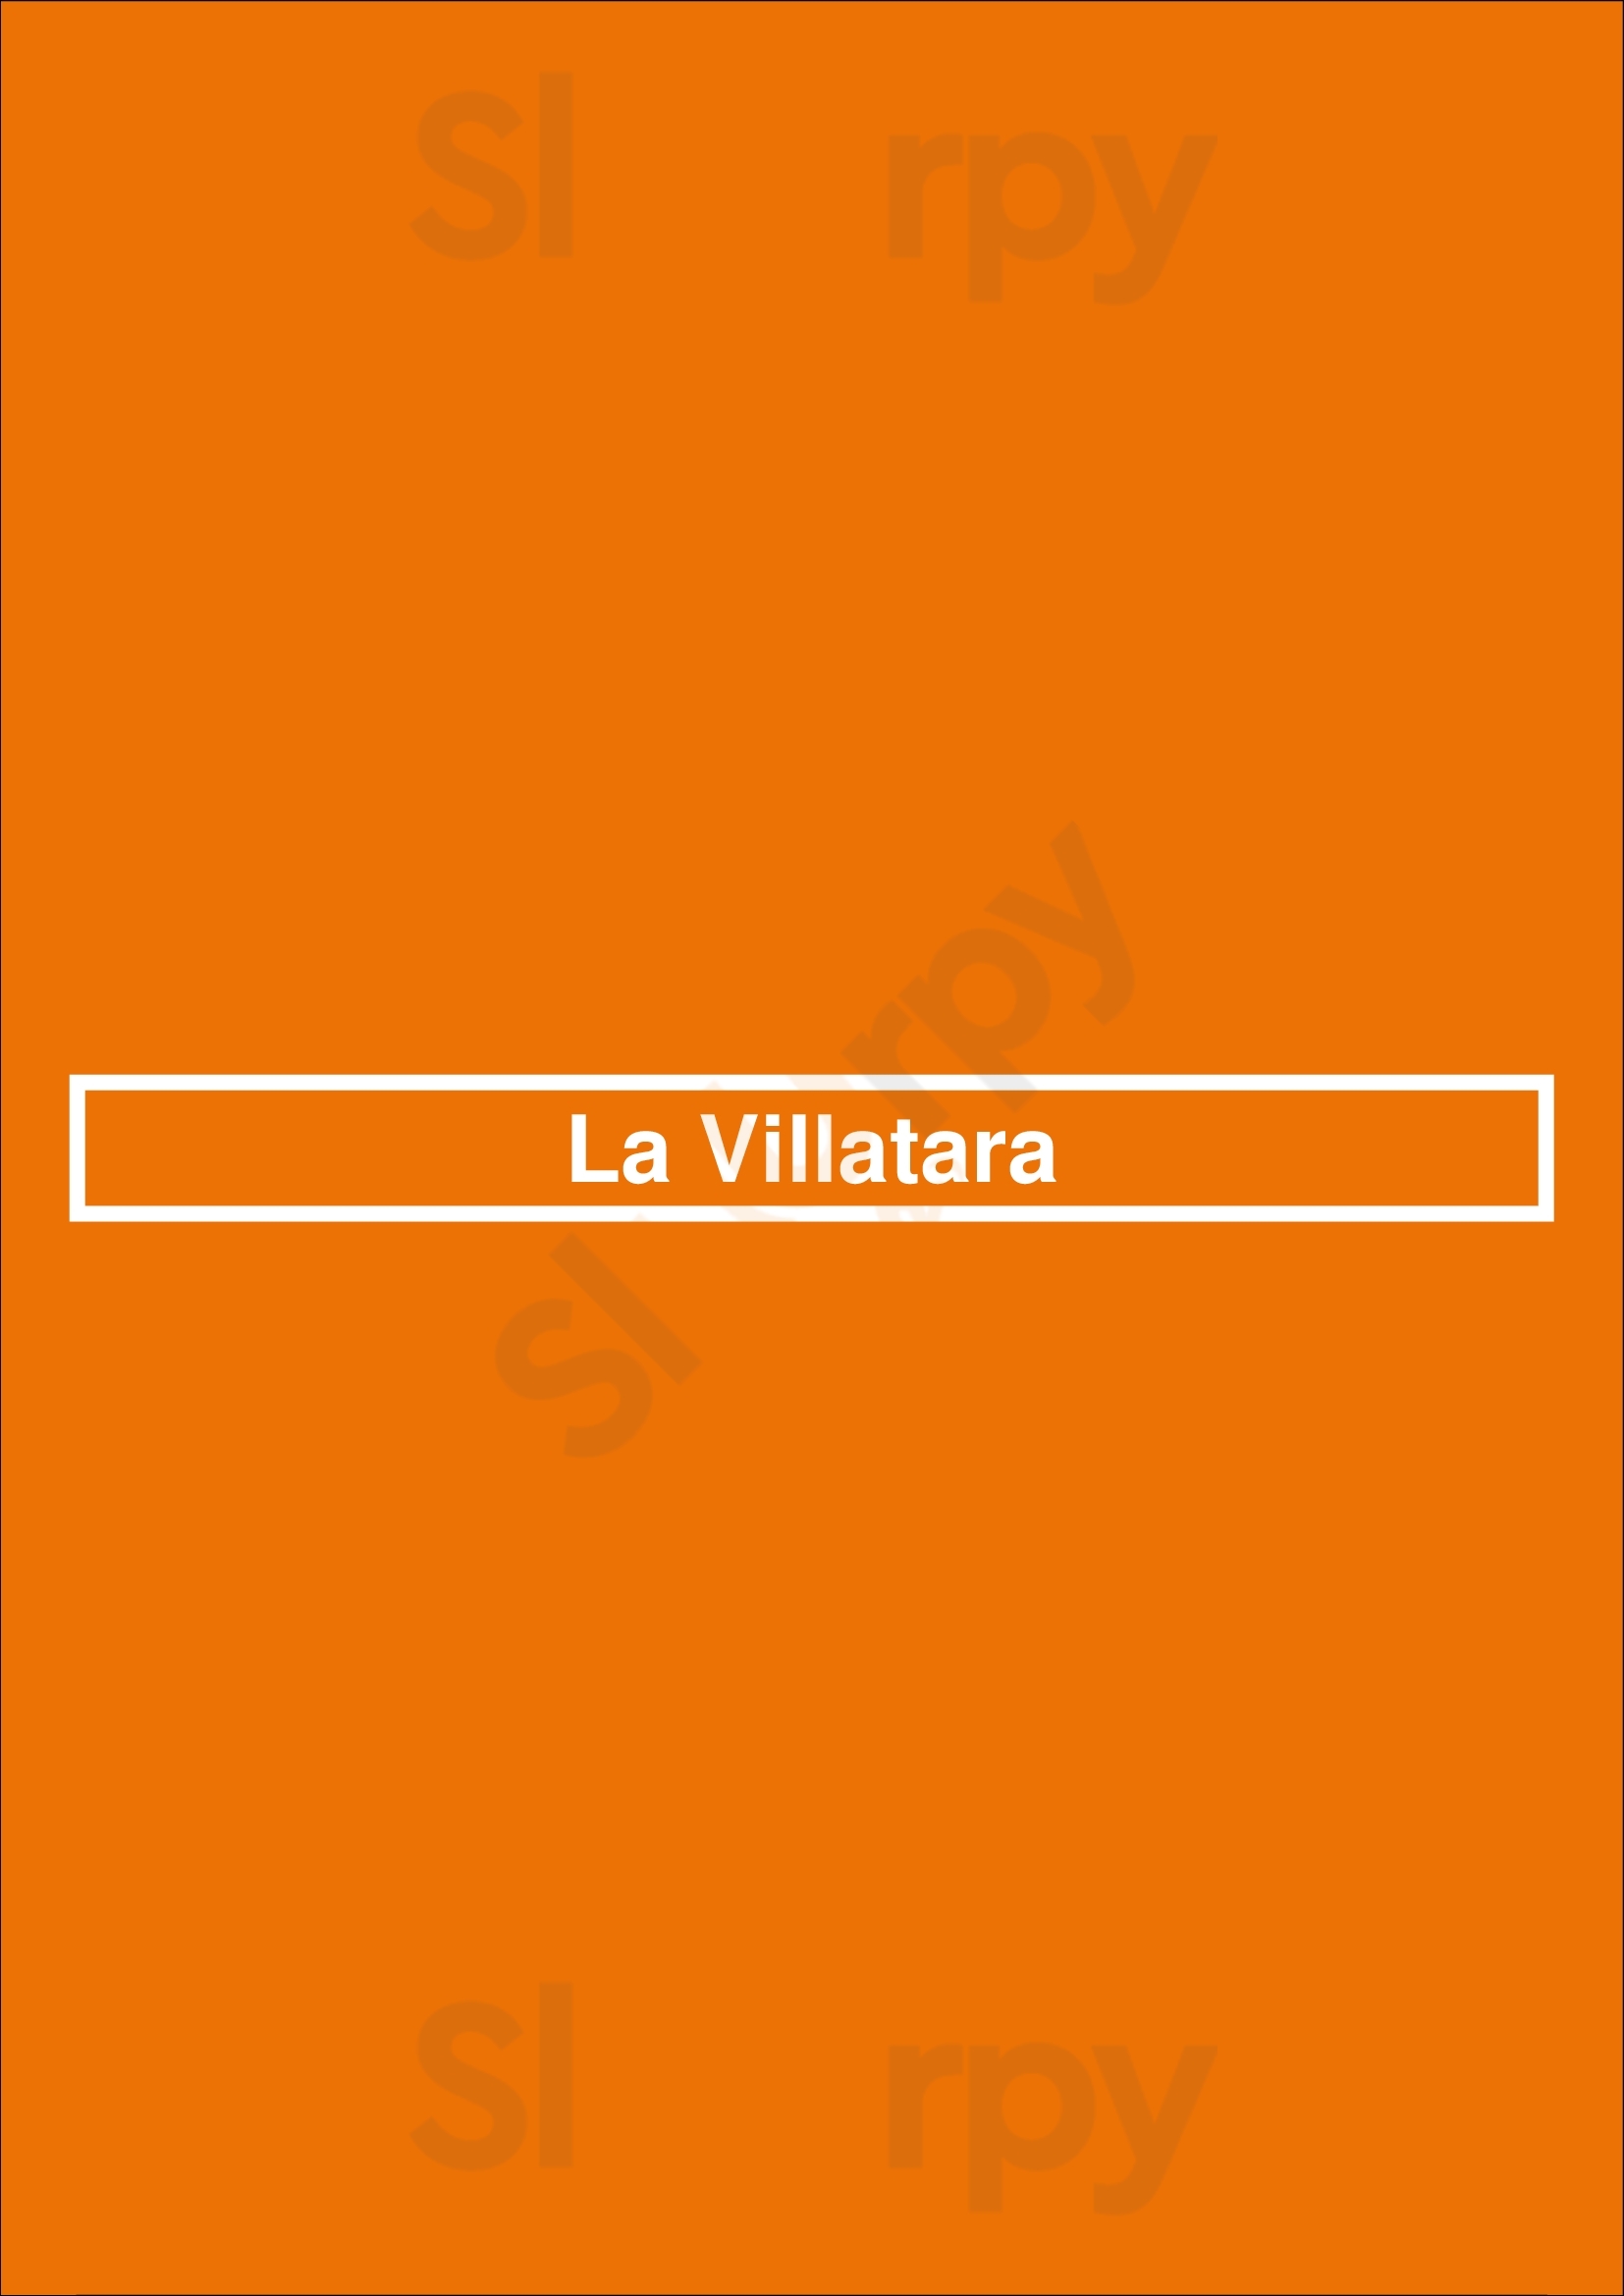 La Villatara Trouville Menu - 1